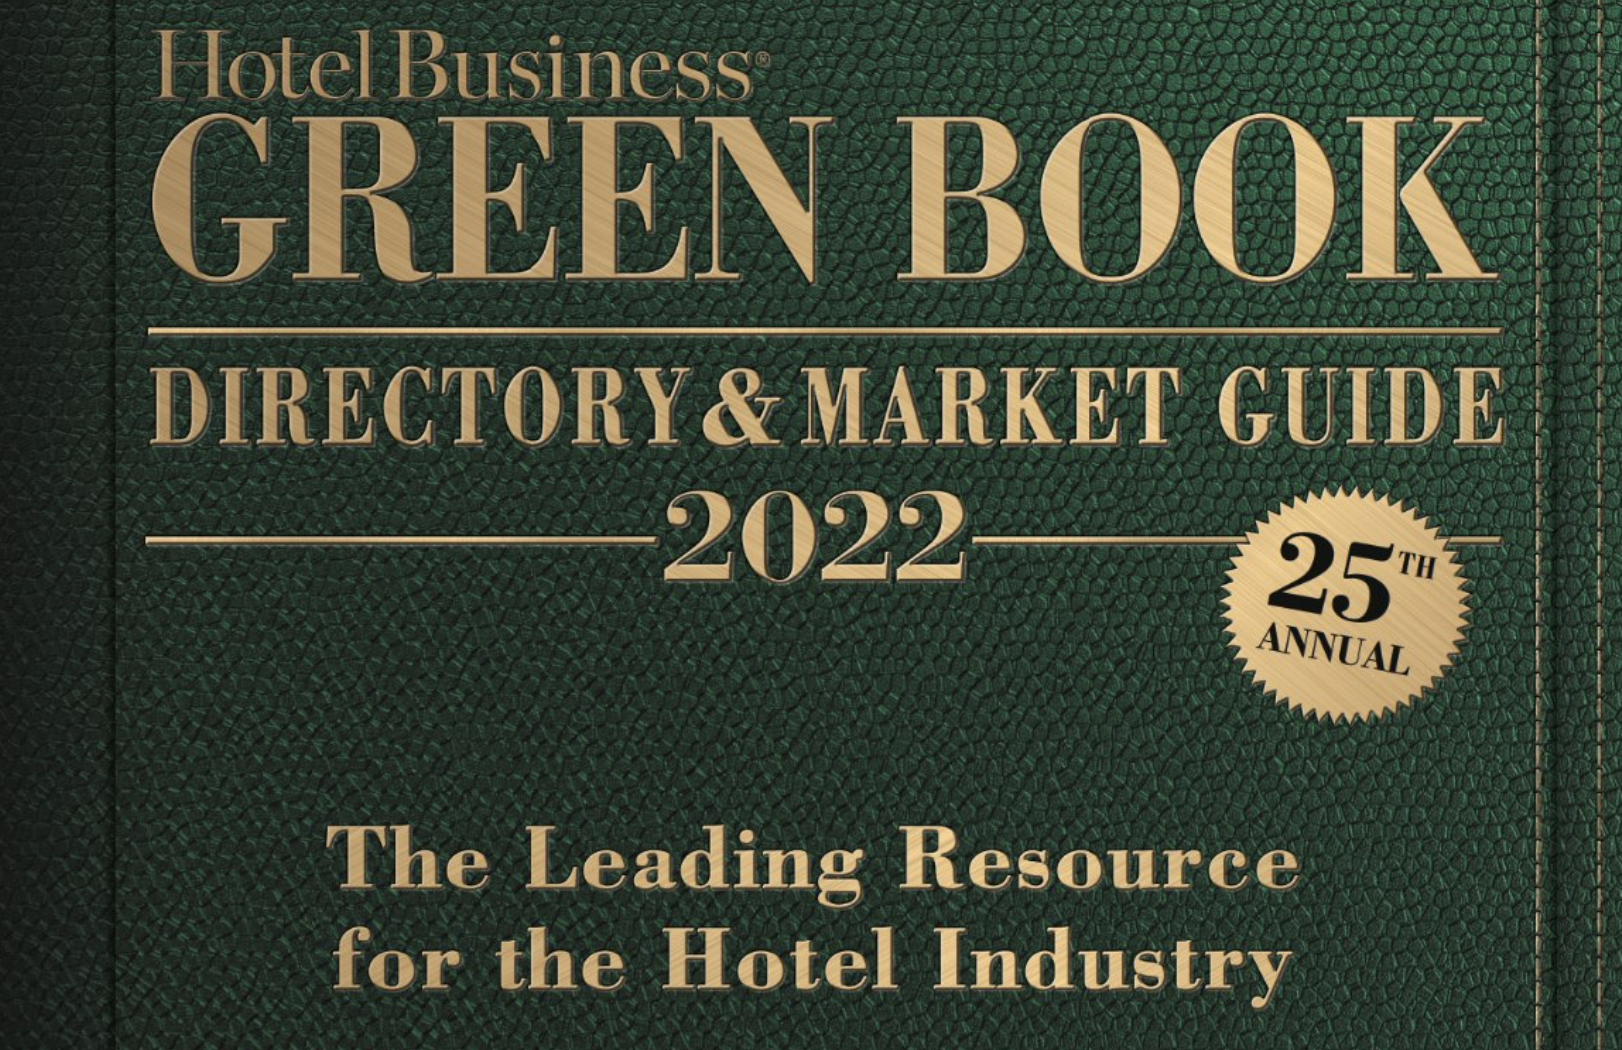 Hotel Business Green Book – John Fareed Looks Ahead